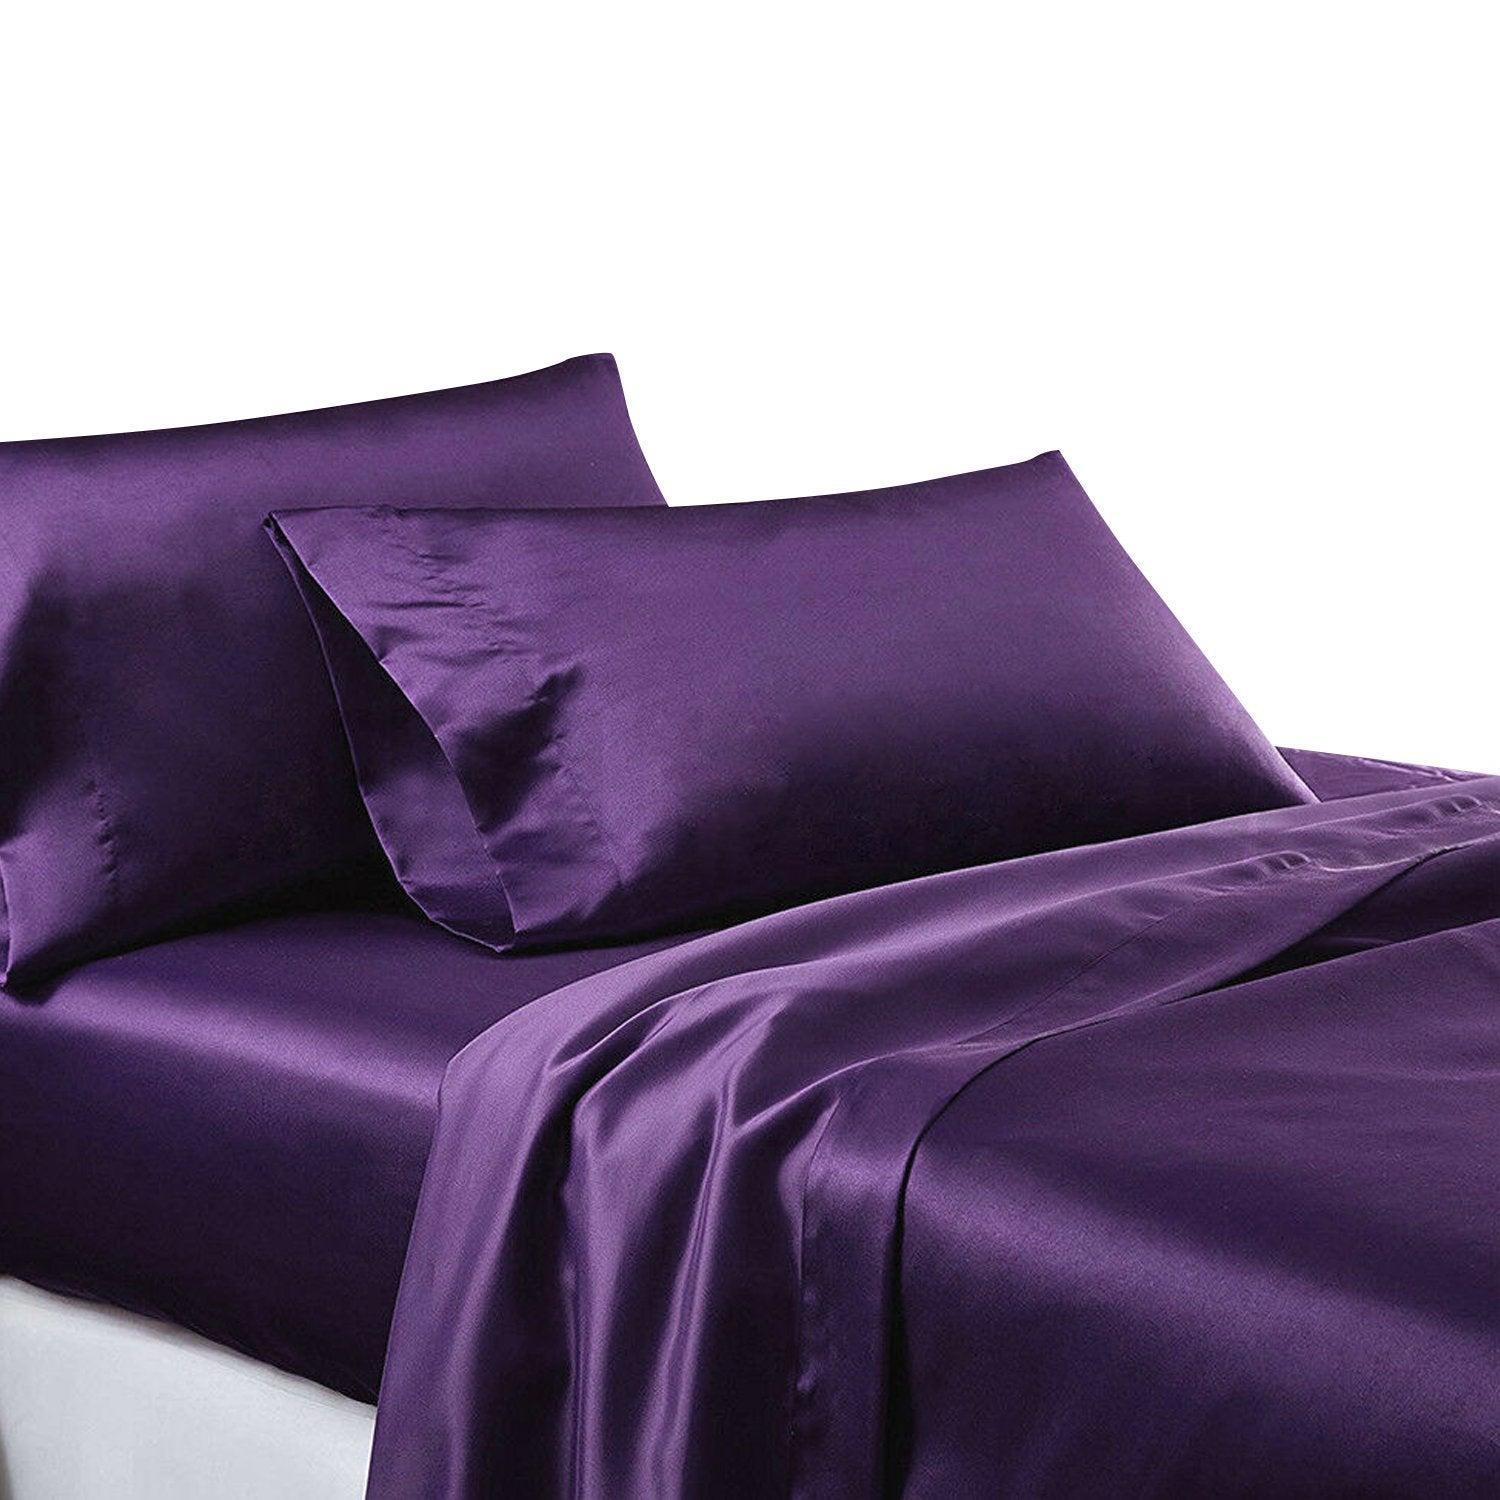 Purple Silk Satin Sheet Flat Fitted Sheet Pillowcase Set